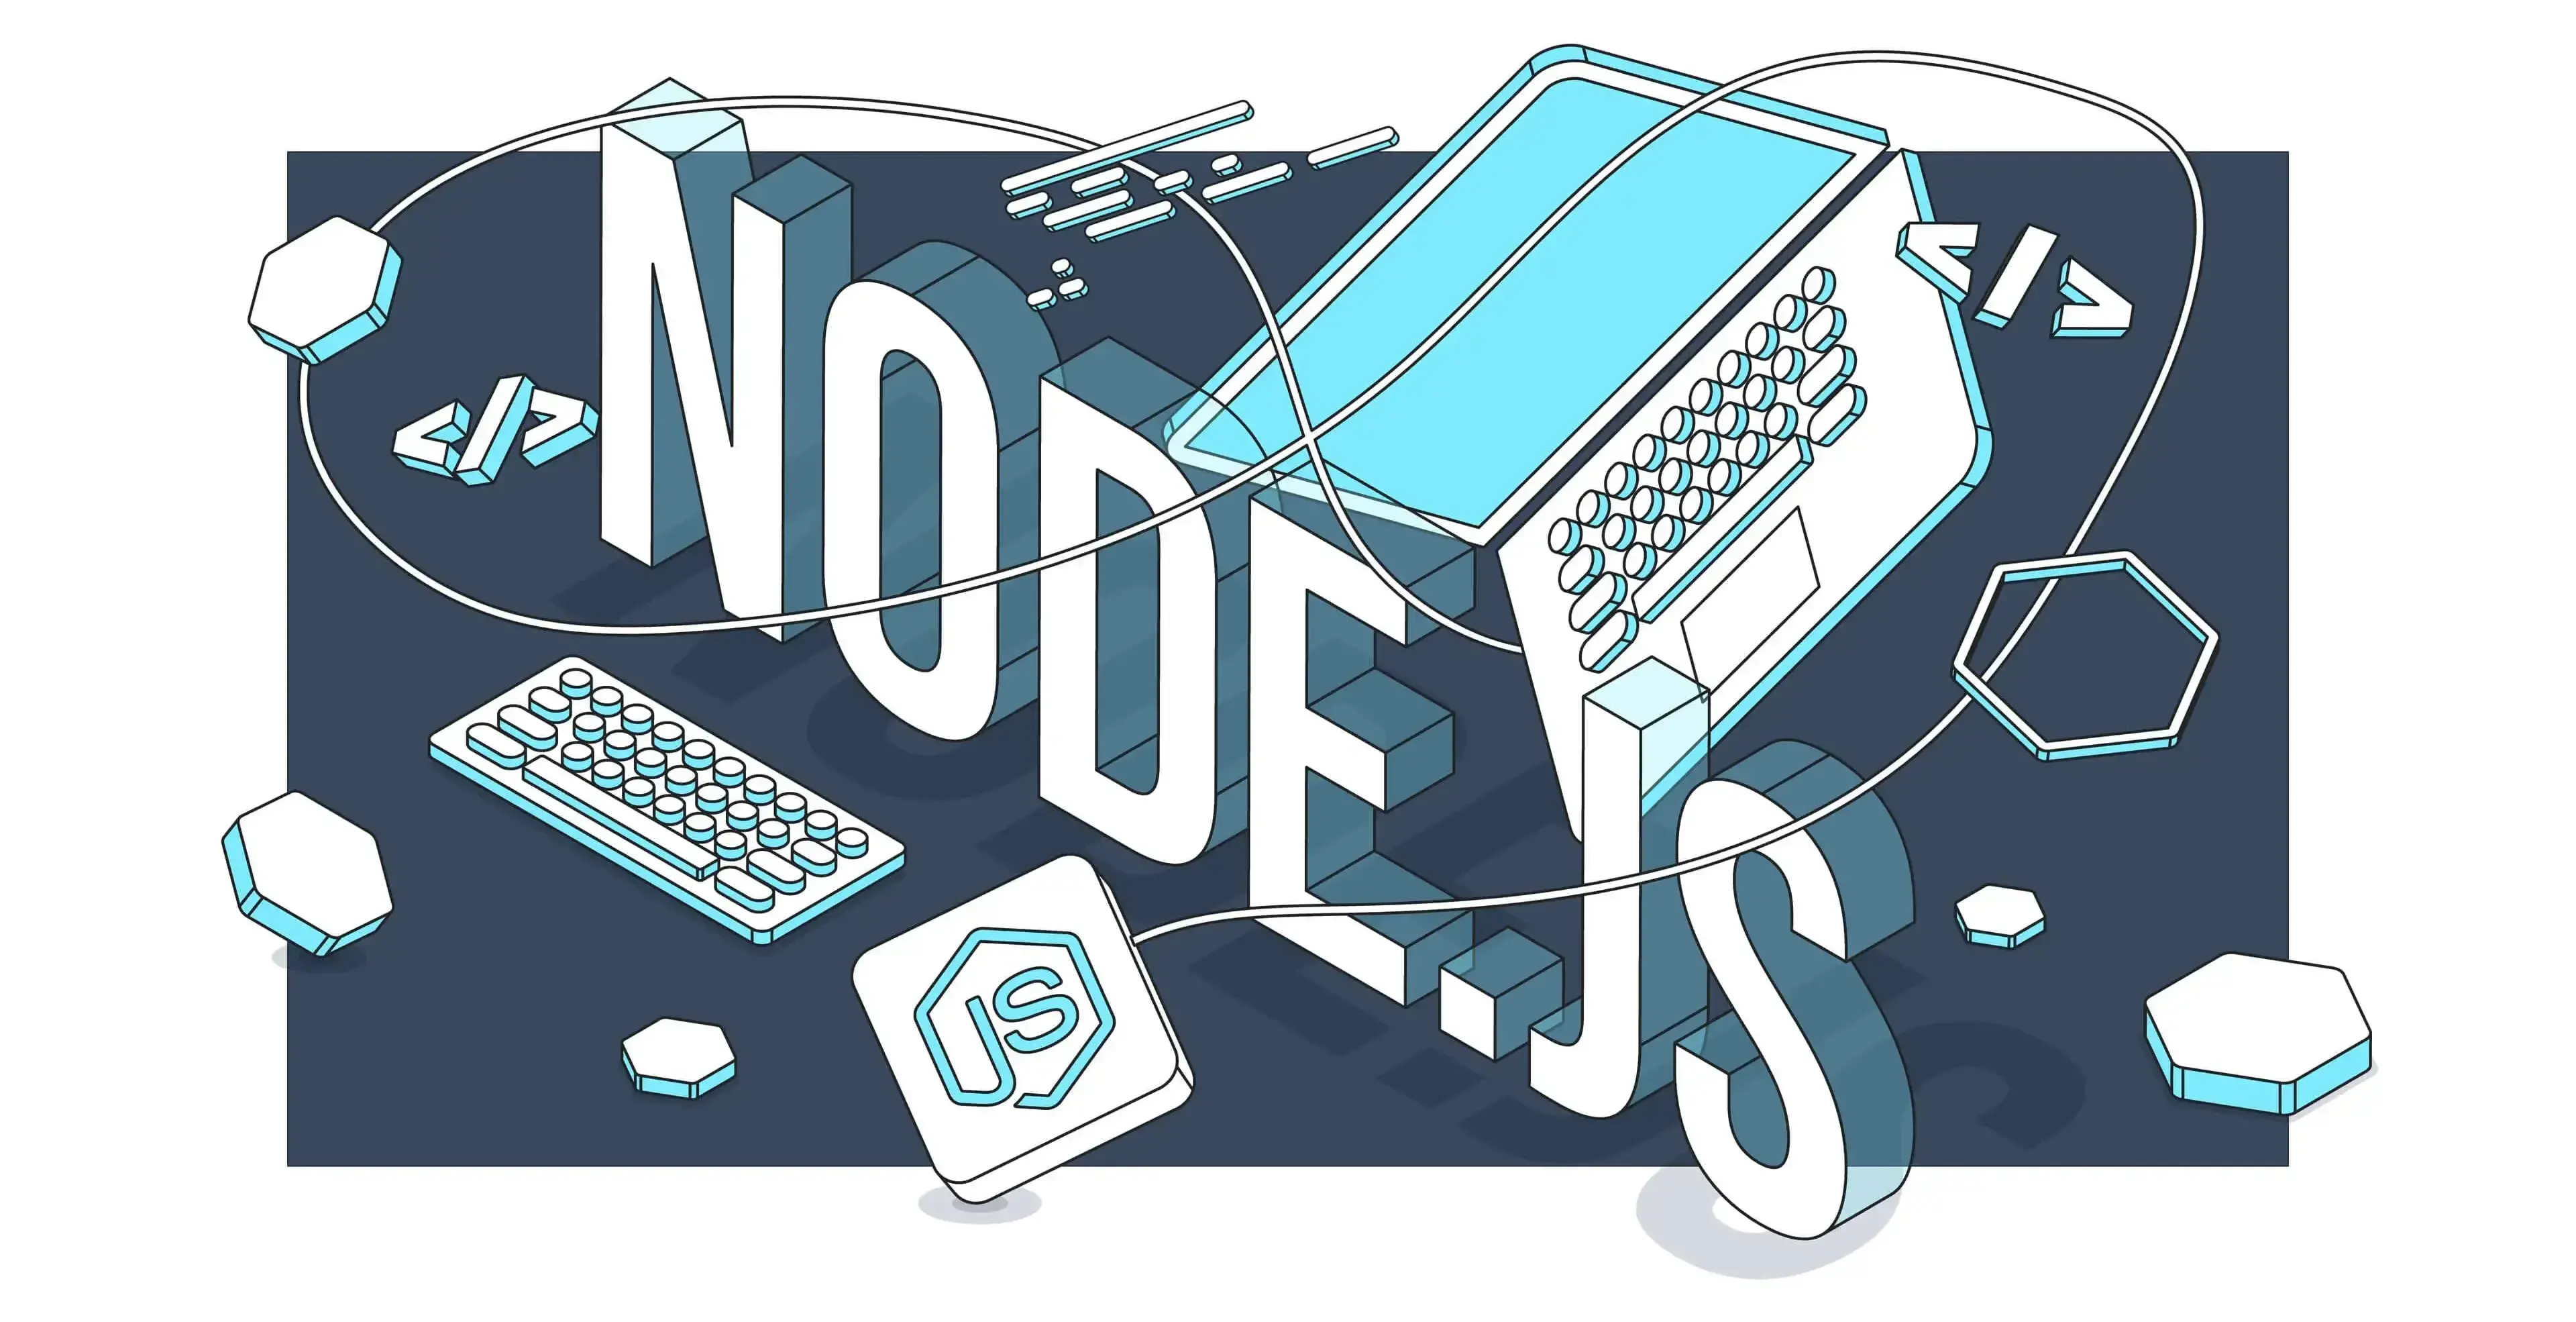 Node.js and Node Package Manager